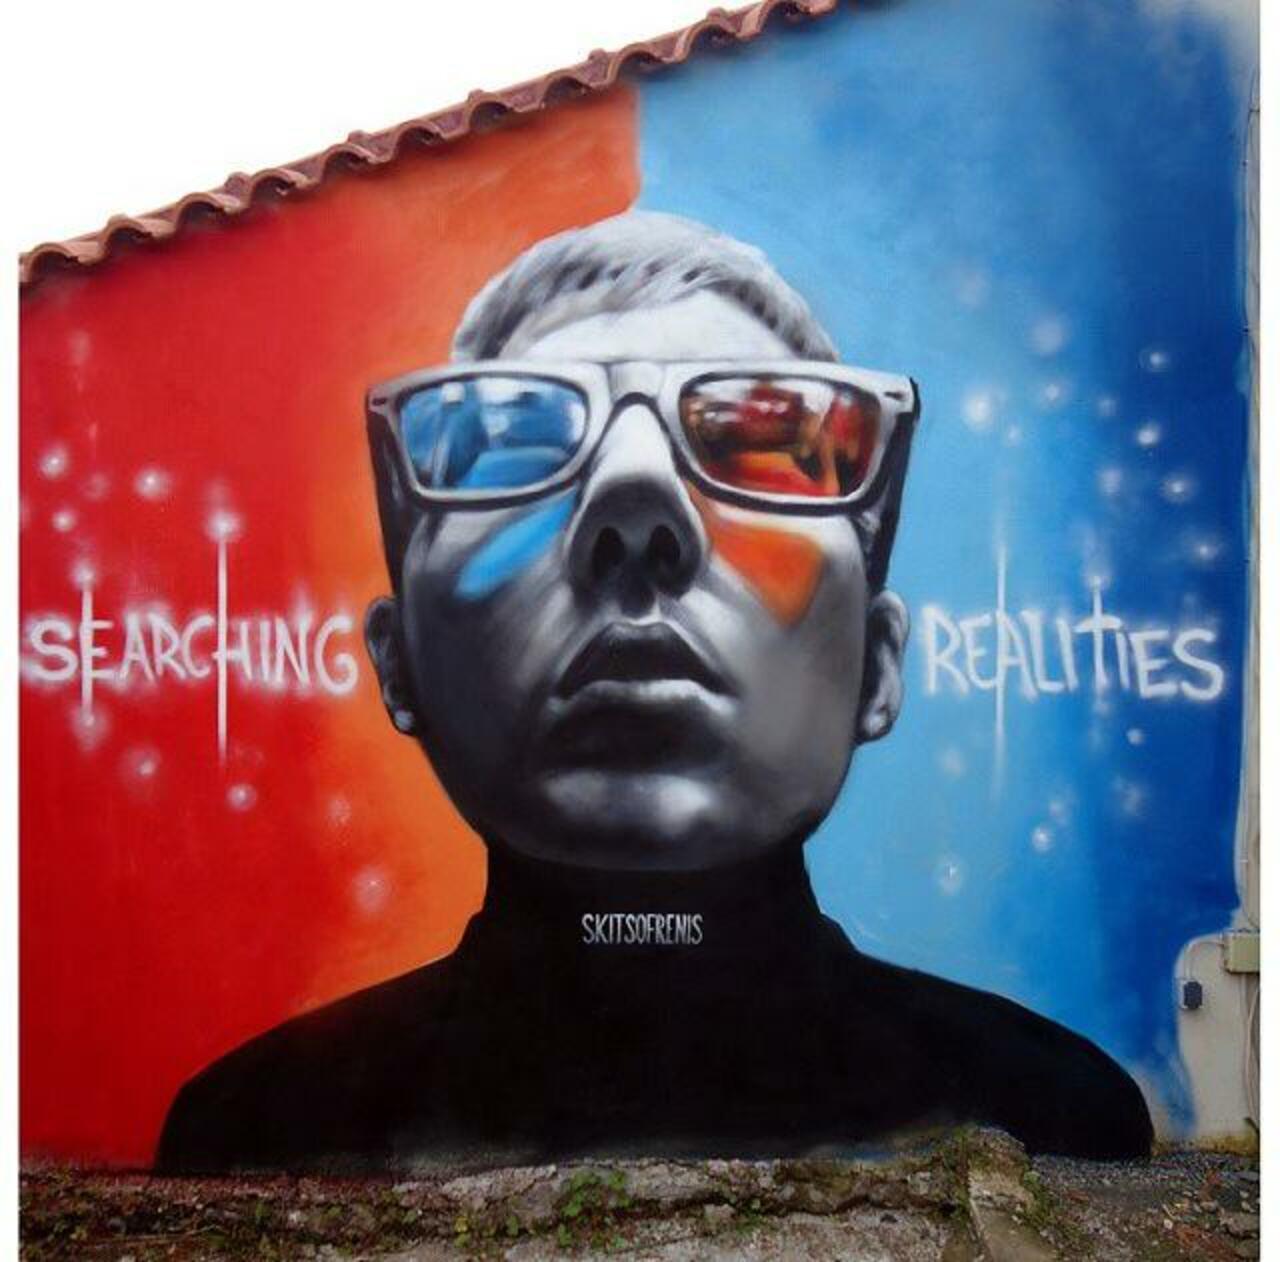 New Street Art titled 'Searching Realties' by skitsofrenis

#art #arte #graffiti #streetart http://t.co/6H5v4VJKj9